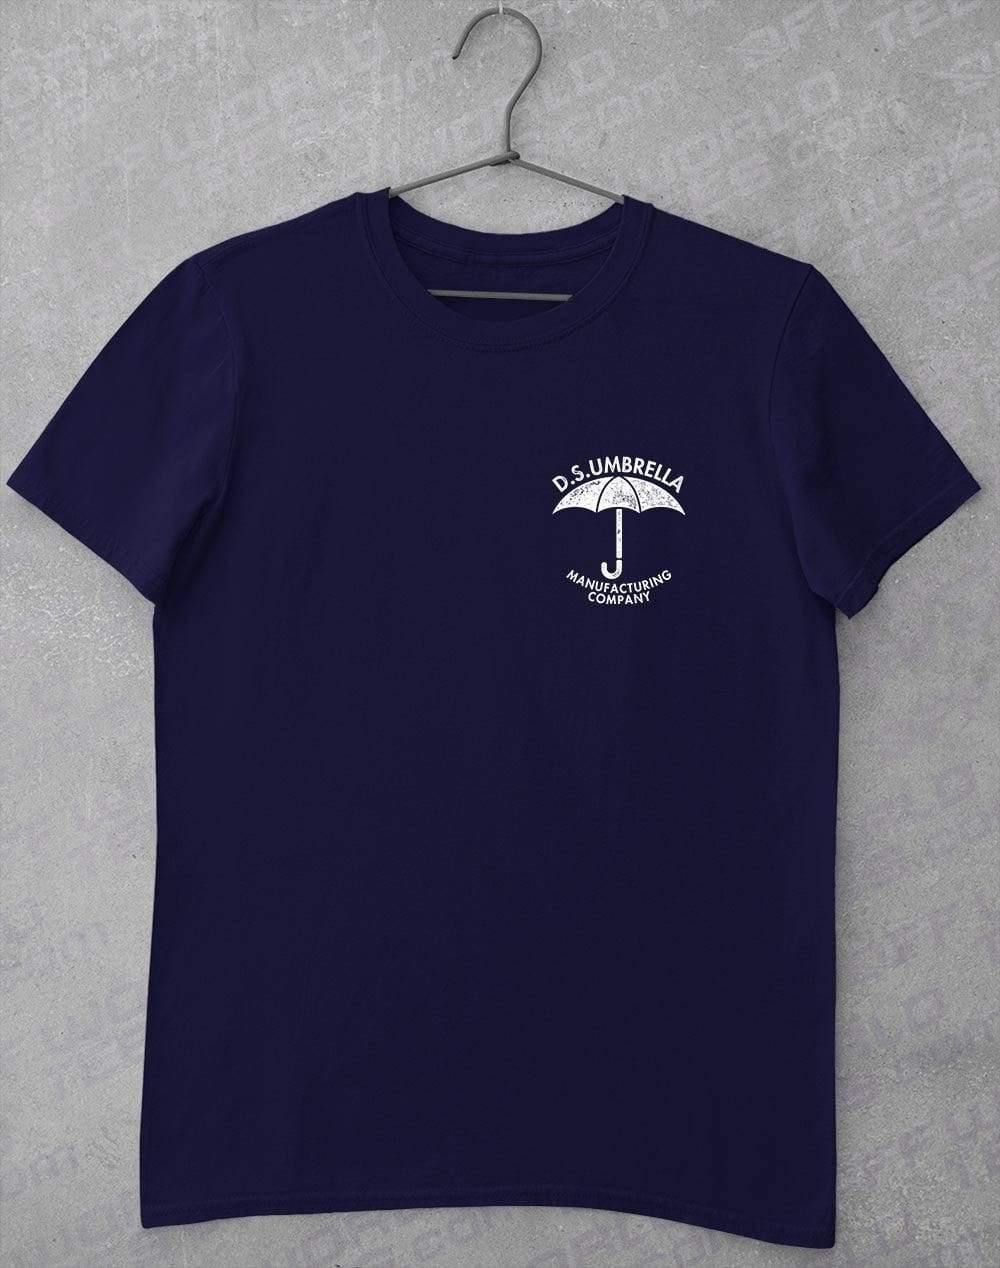 D.S. Umbrella T-Shirt S / Navy  - Off World Tees